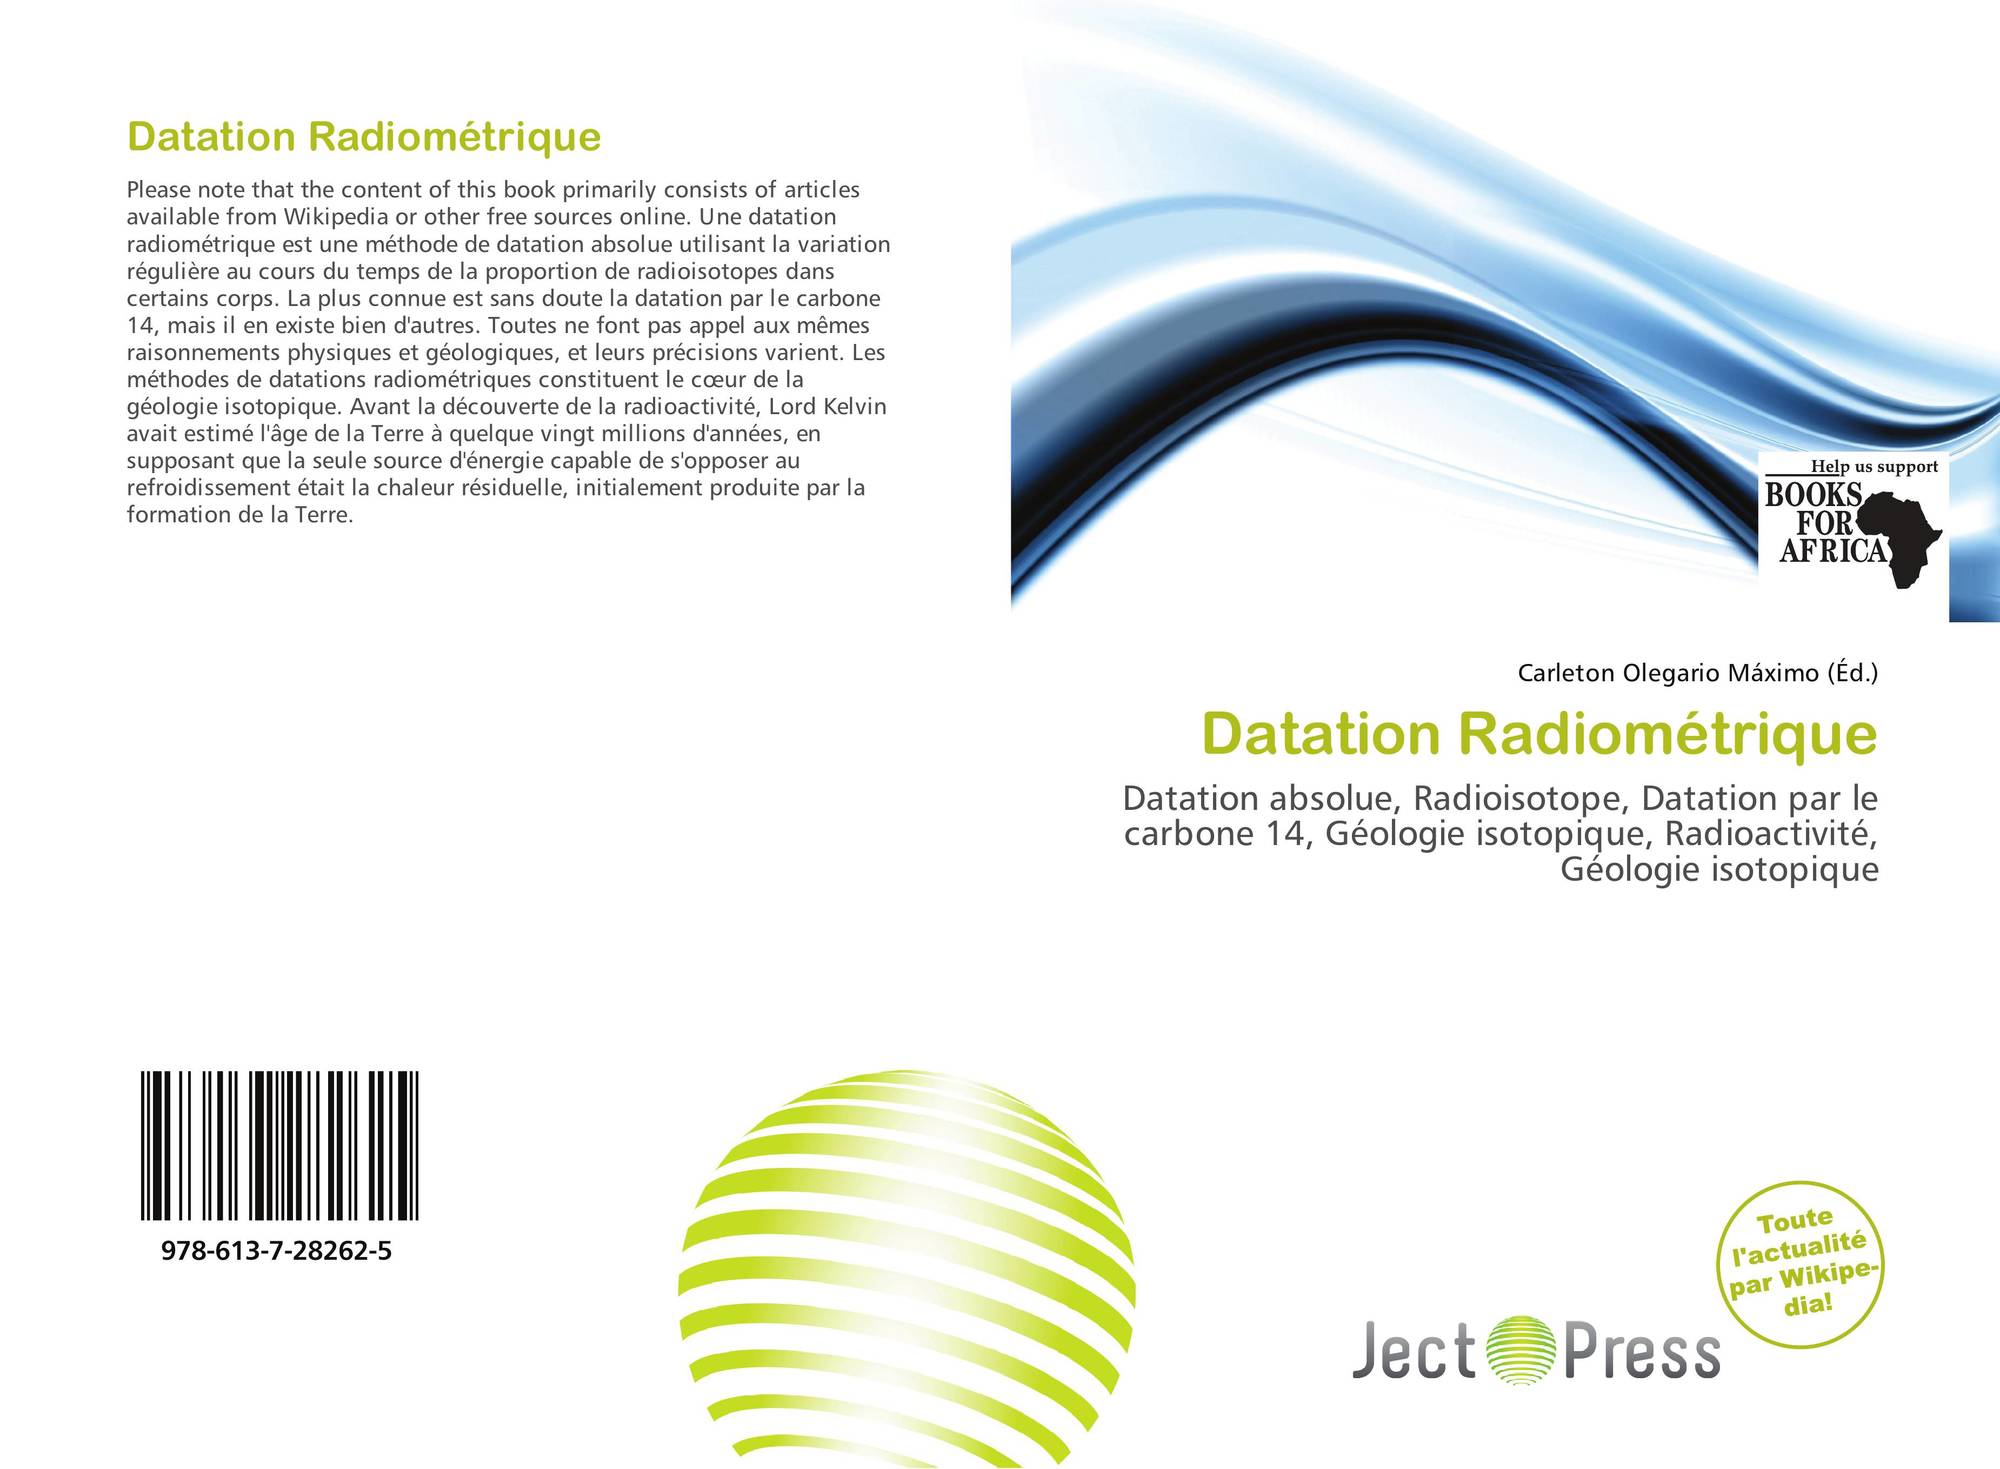 Radio-isotopes de datation radioactive